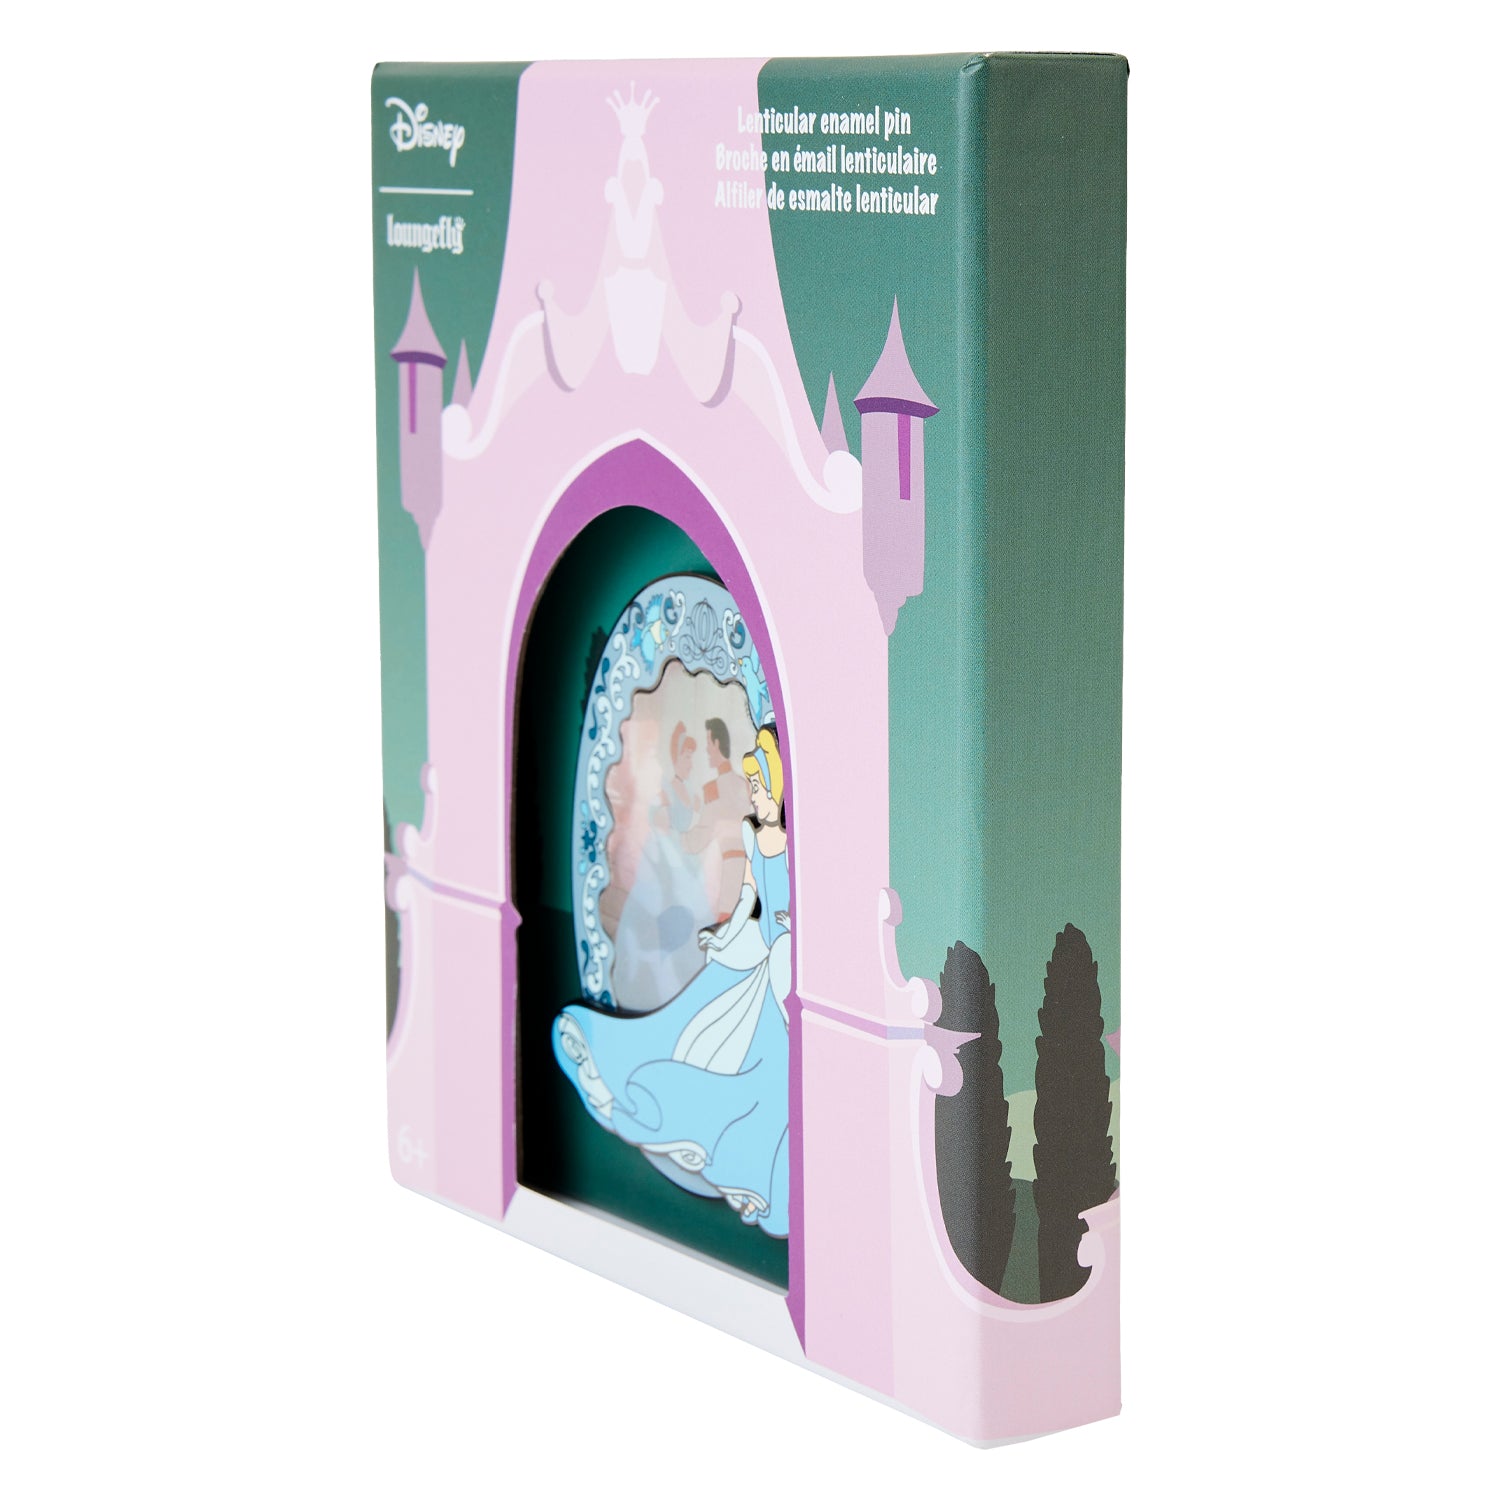  Loungefly Disney Princess Castle Series Sleeping